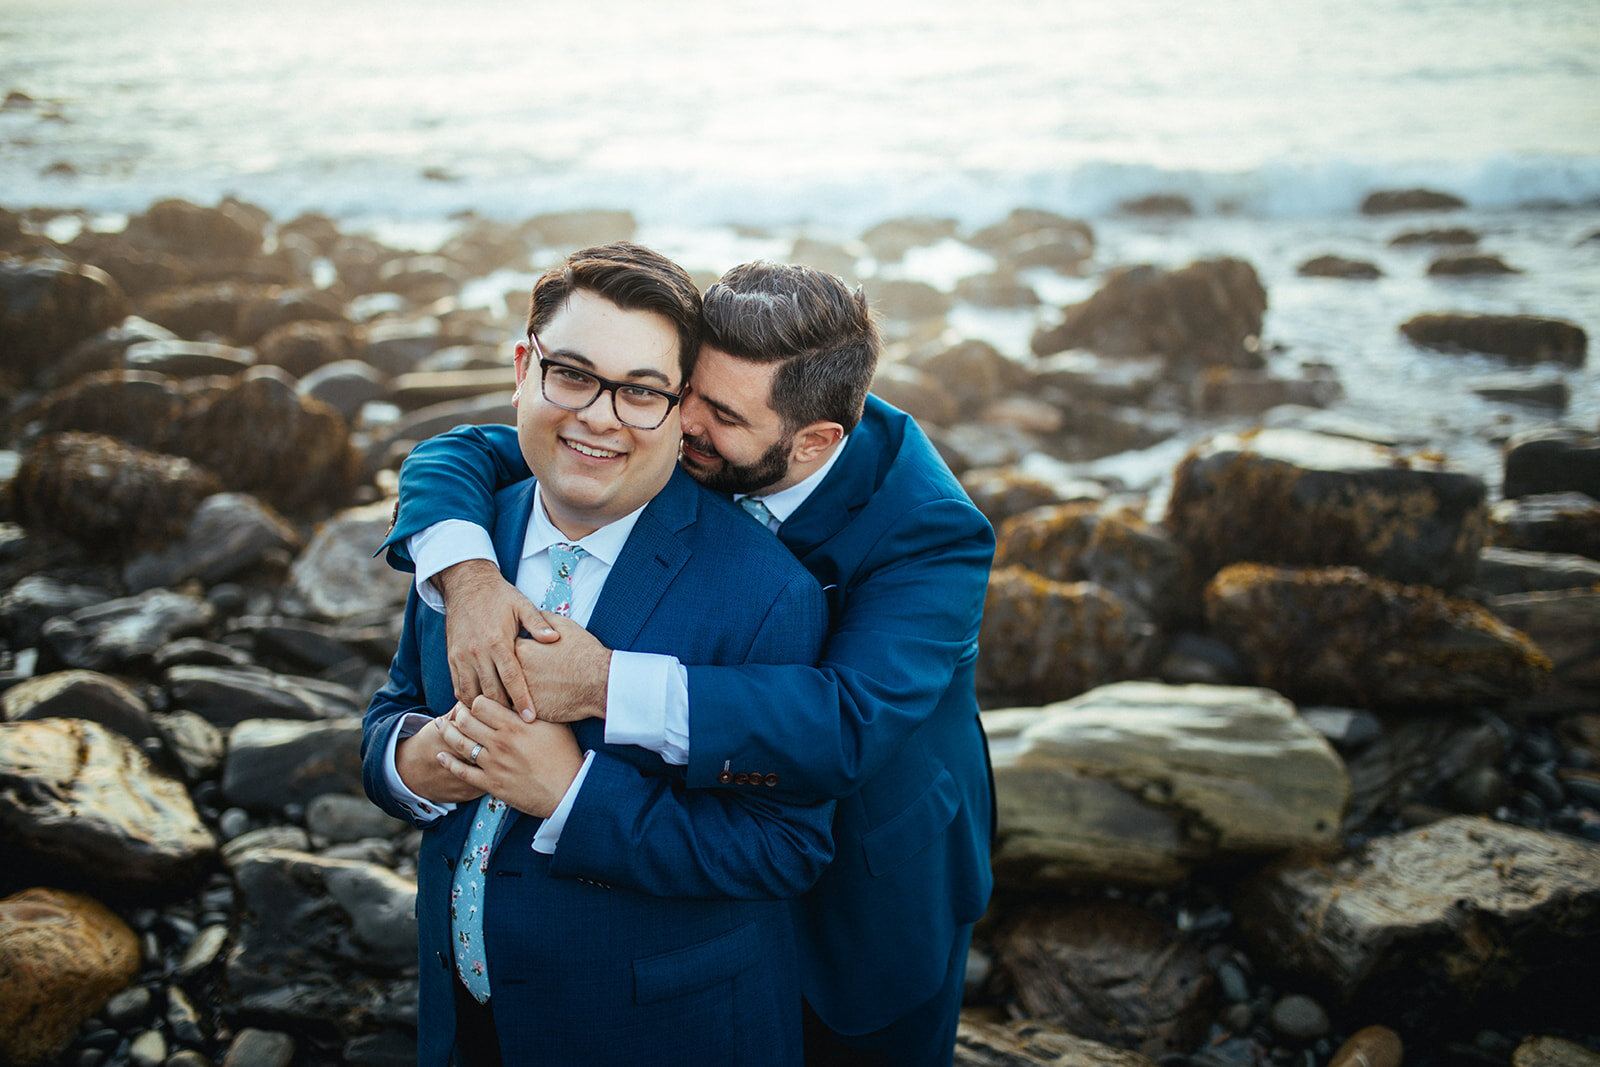 Queer couple embracing on a rocky beach in Peaks Island Portland ME Shawnee Custalow wedding photography